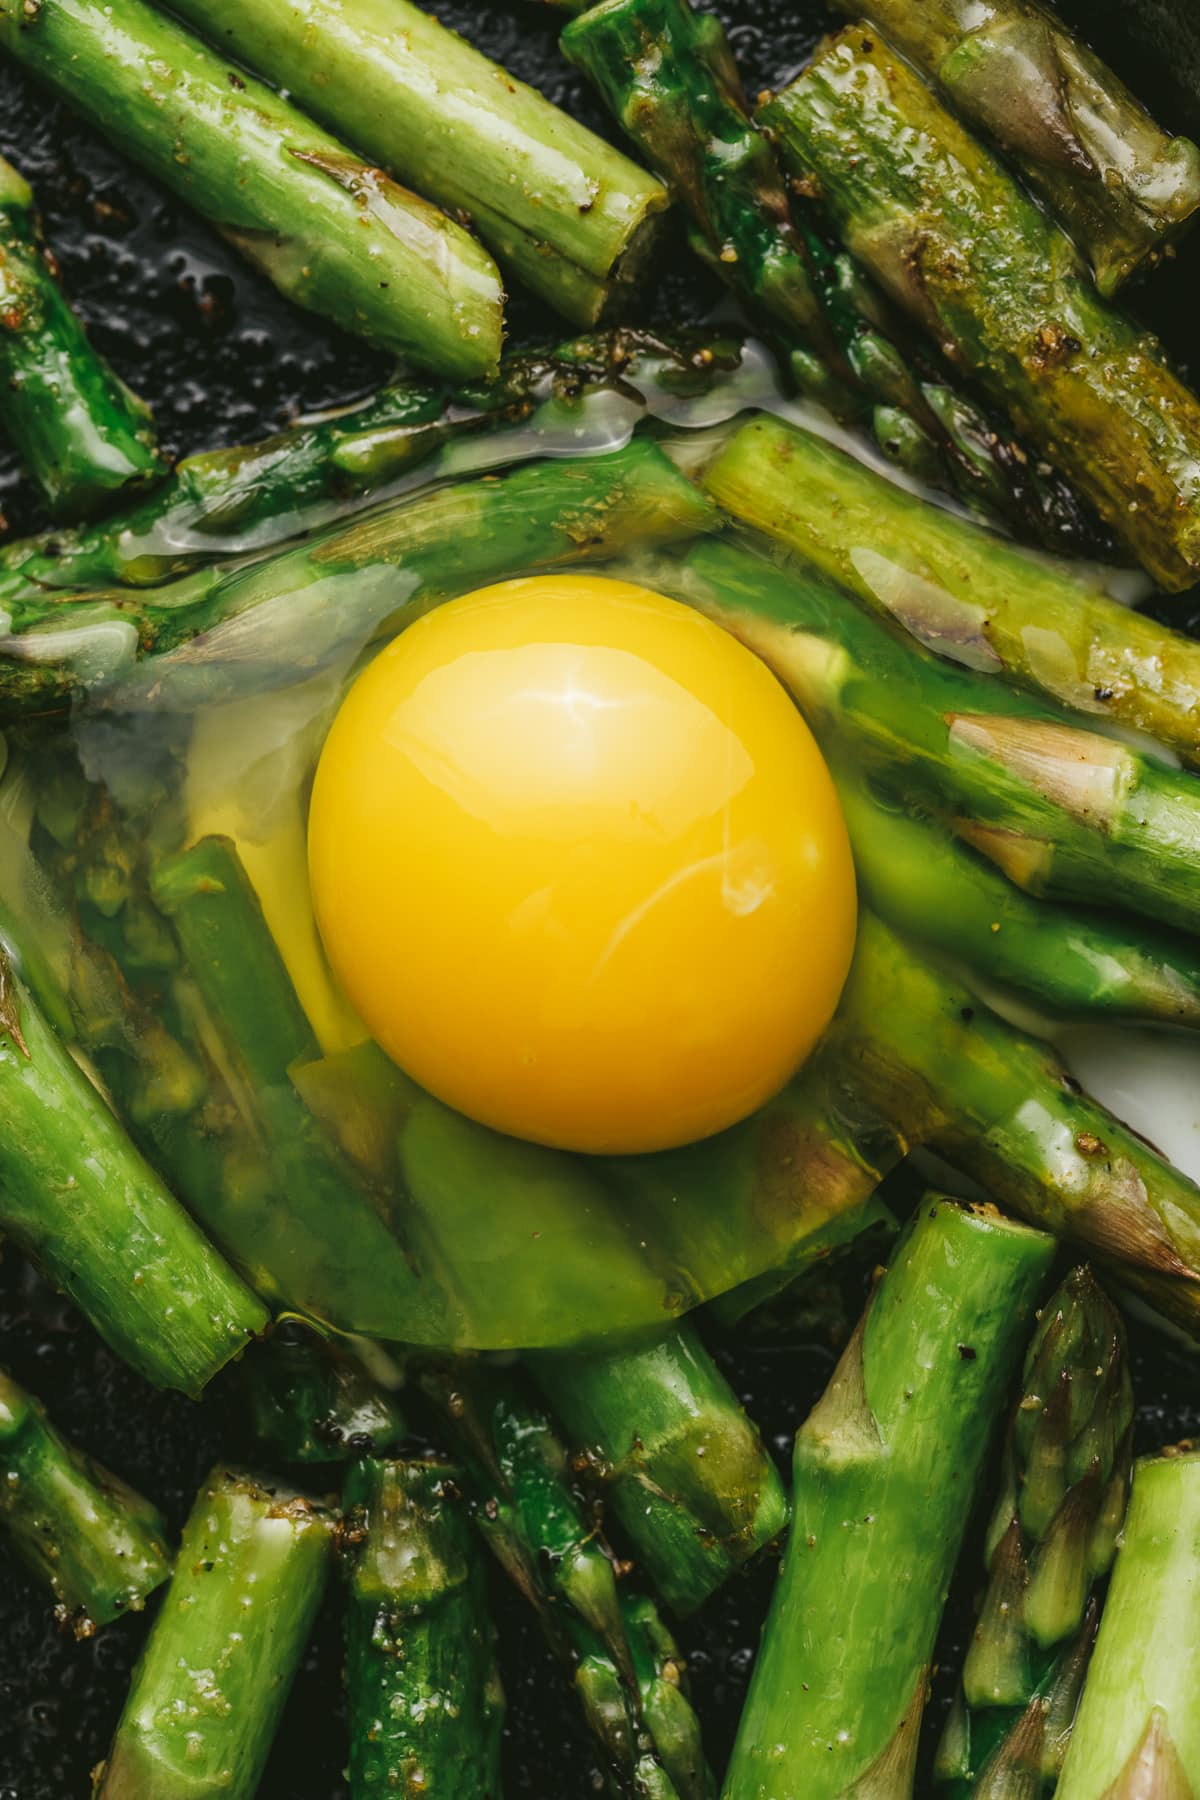 A raw egg on top of cut asparagus spears.